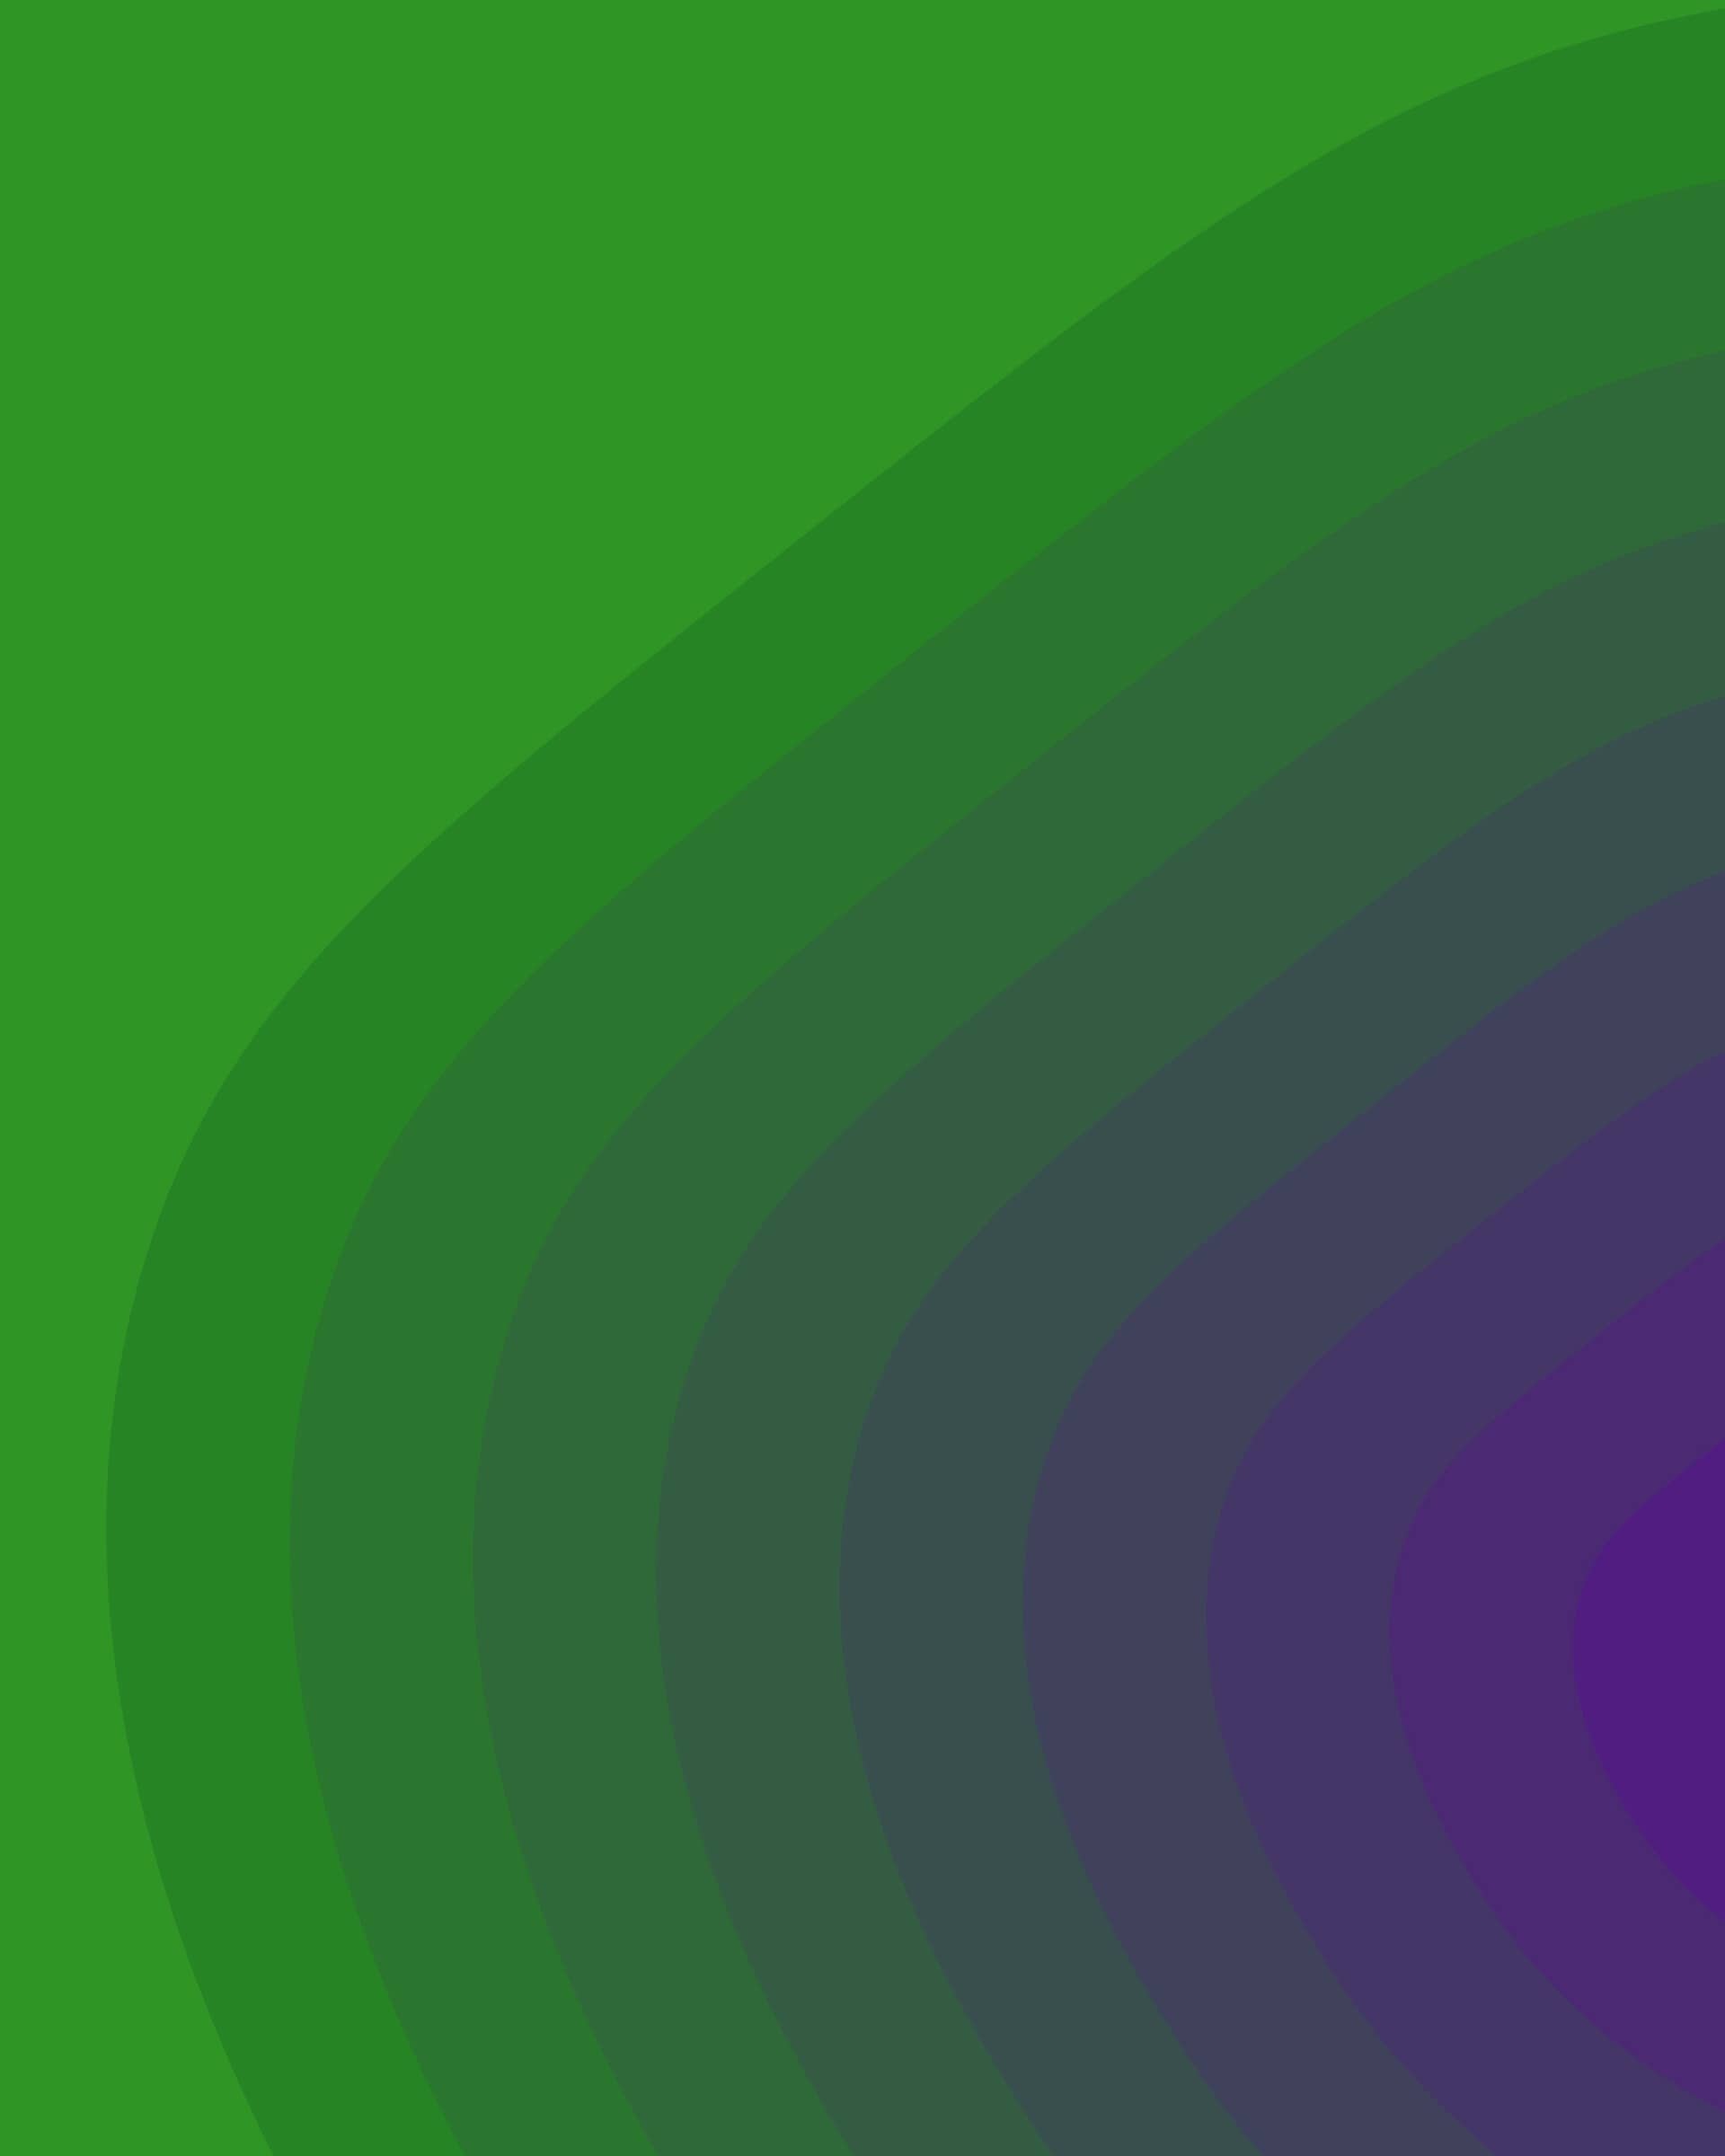 Yosiento branded purple-to-green organic background